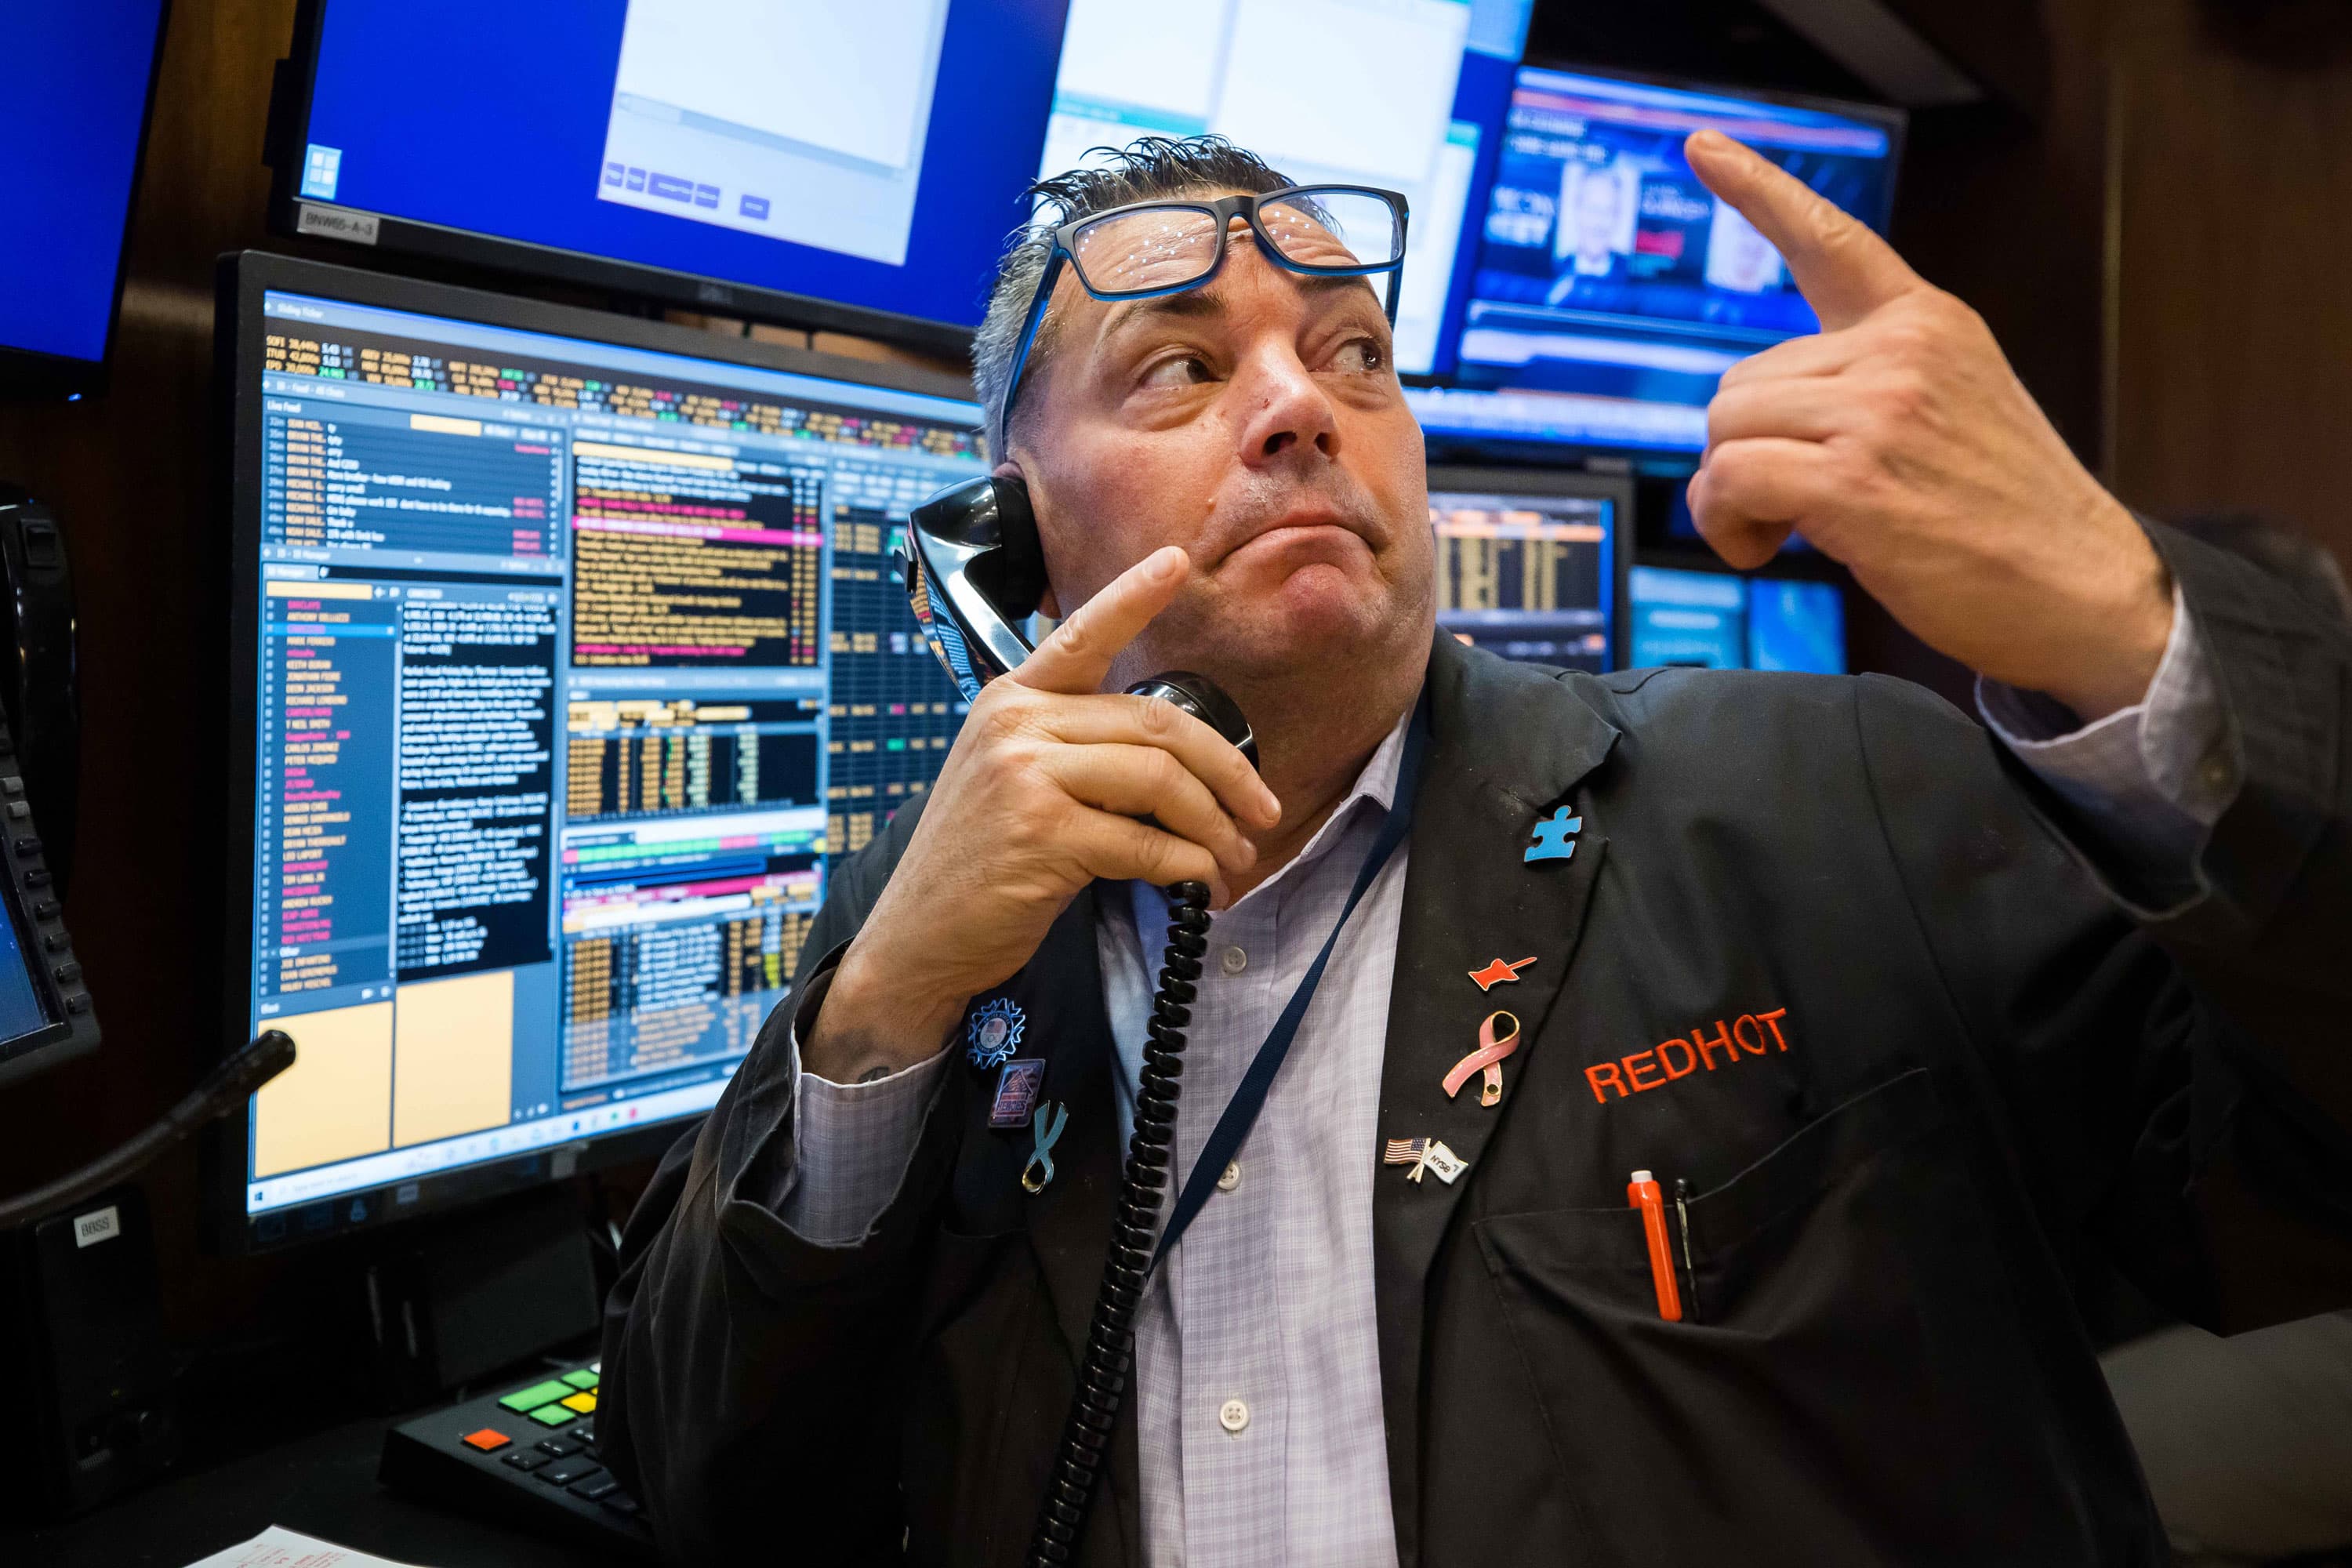 Stock futures, Wall Street looks to extend the market's bull run